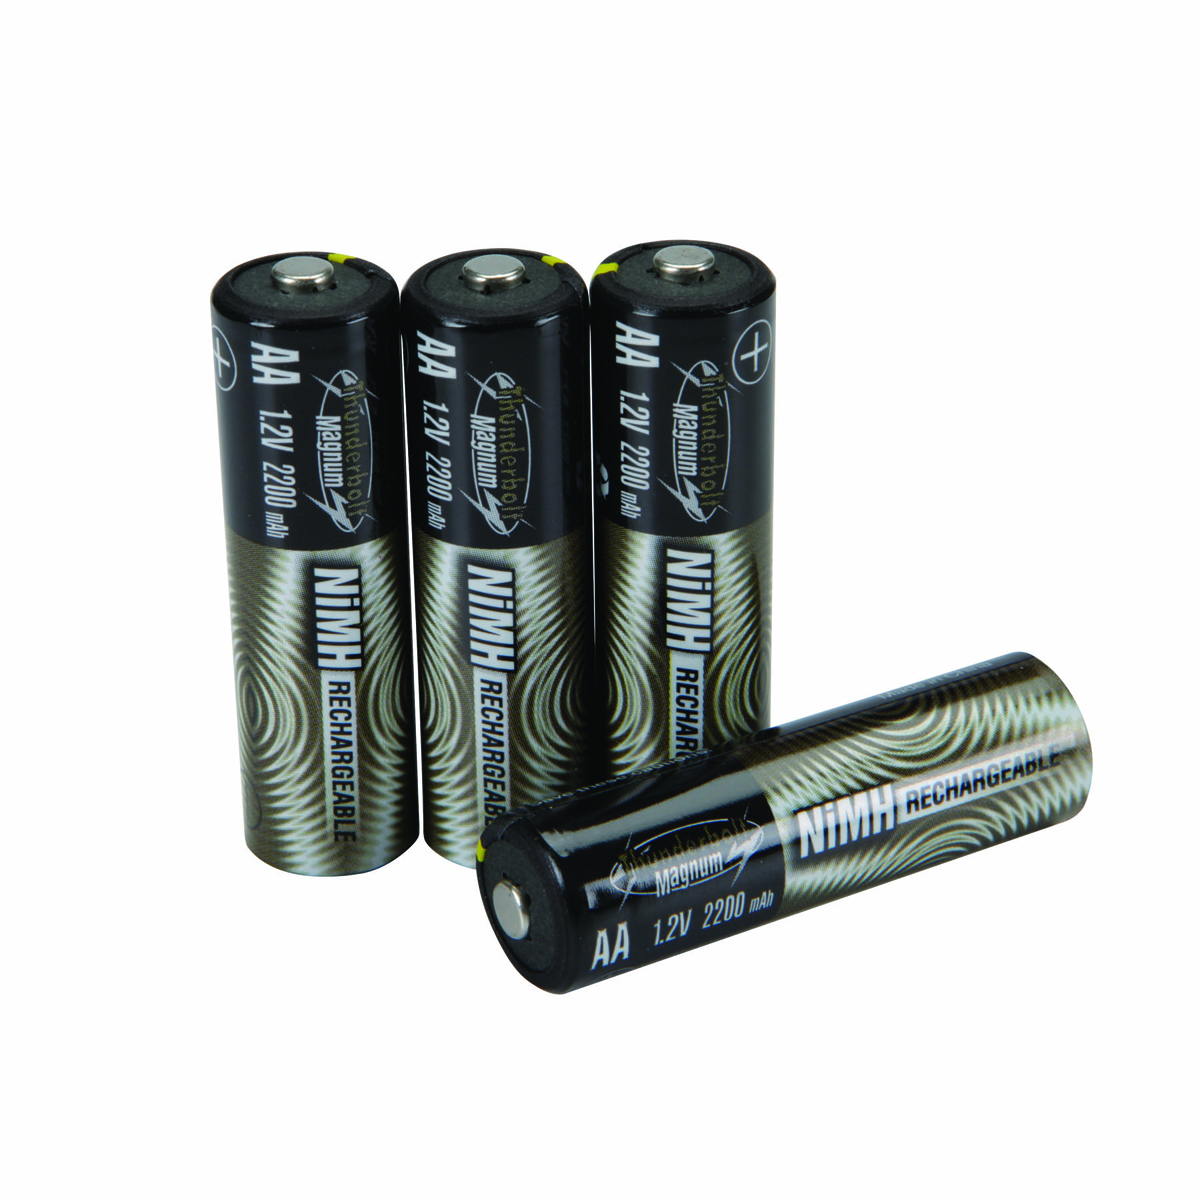 THUNDERBOLT AA High Capacity NiMH Rechargeable Batteries 4 Pk. - Item 97866